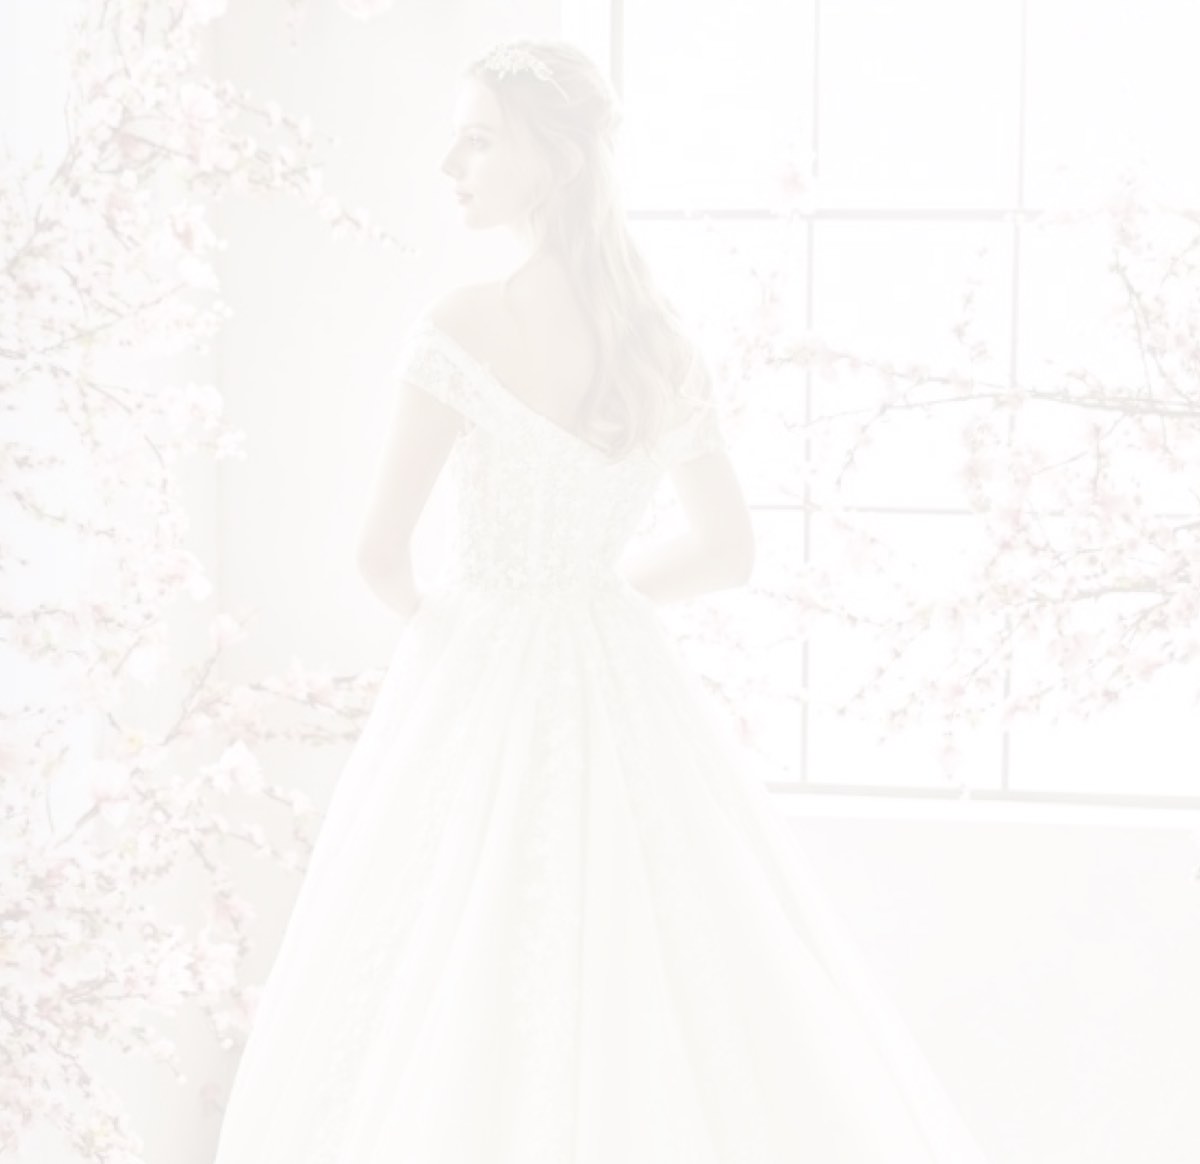 Model Wearing a bridal gown by La Sposa